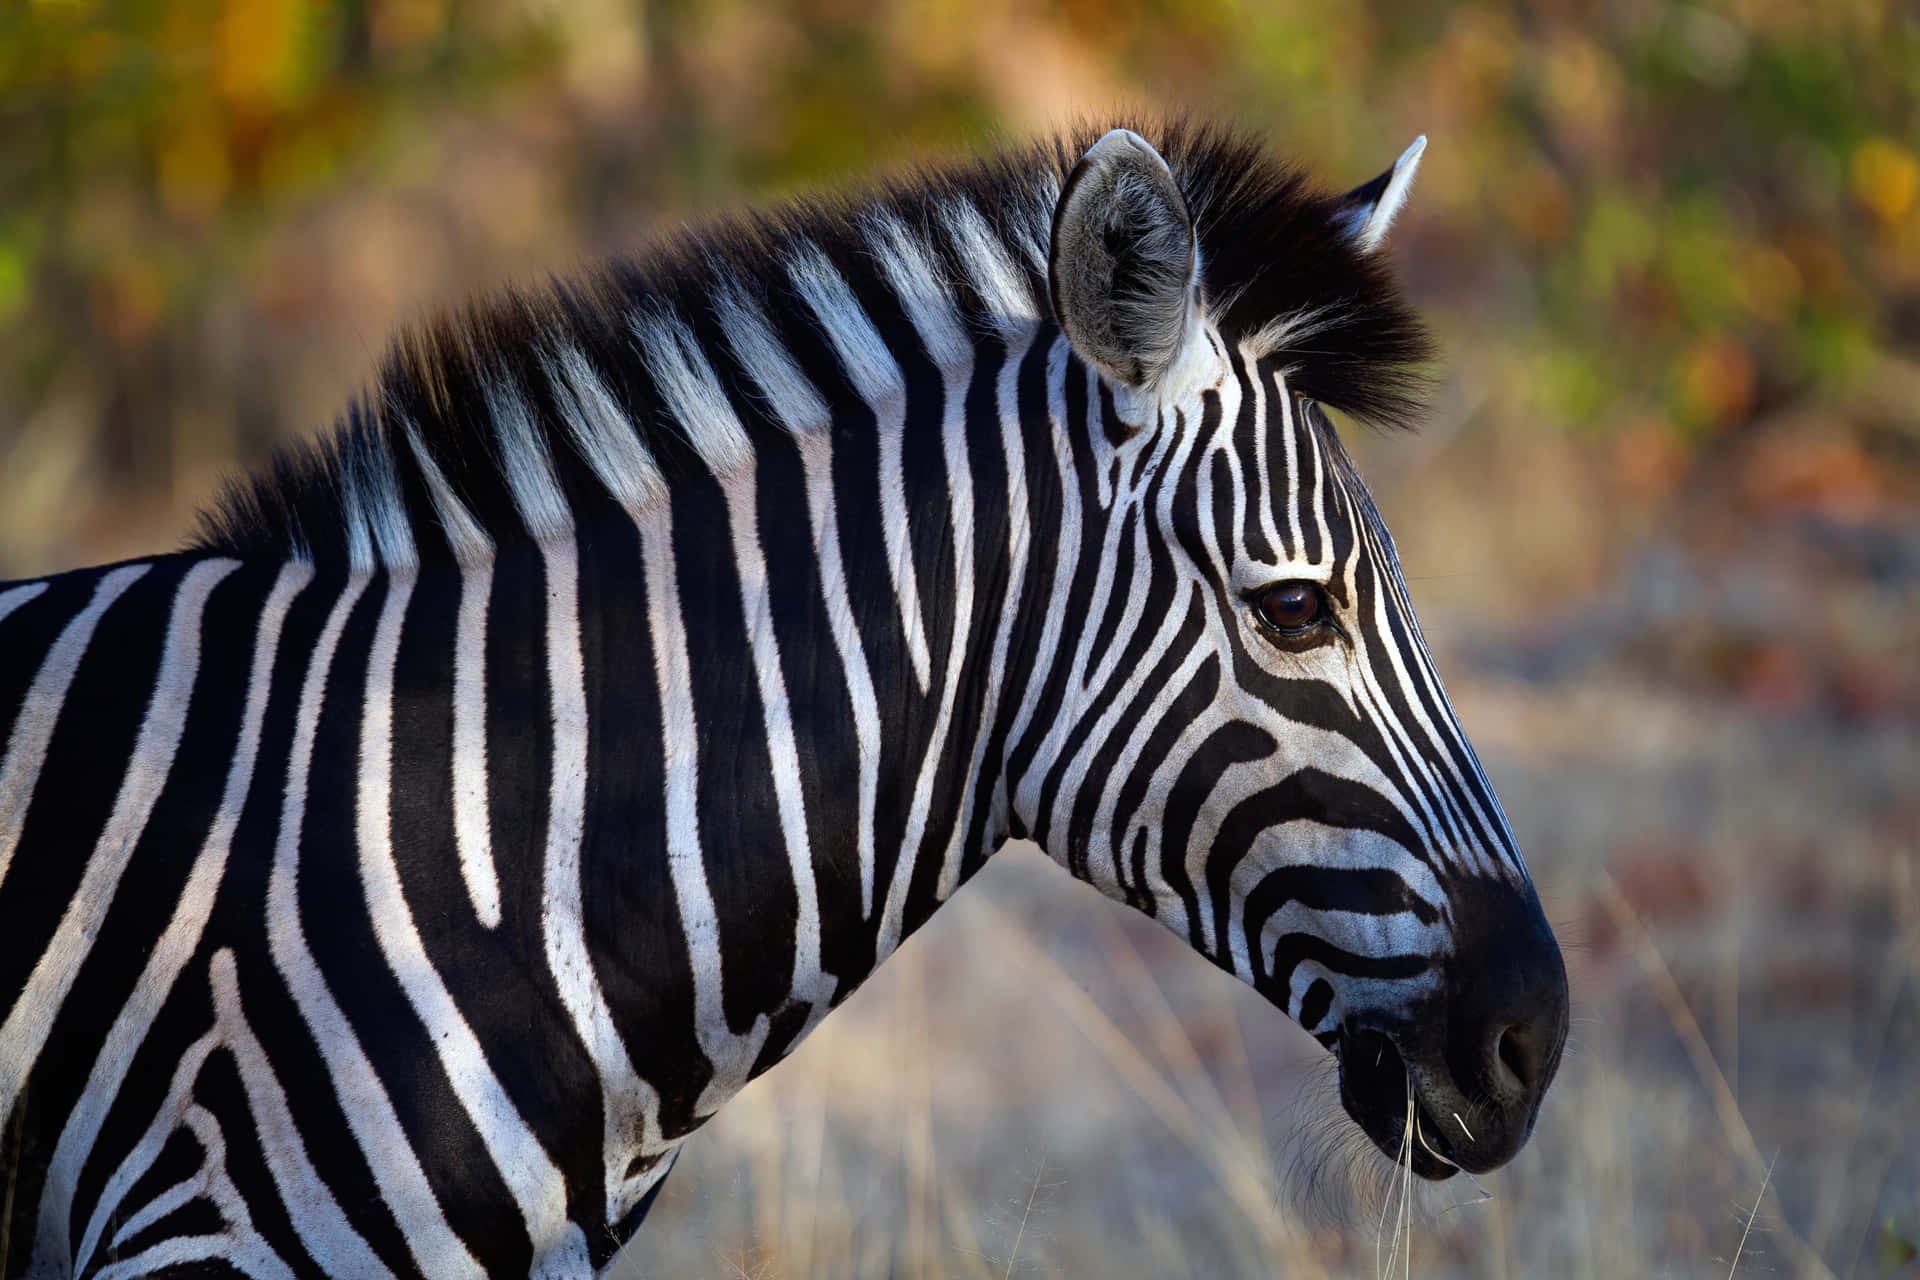 A zebra standing in a green pasture